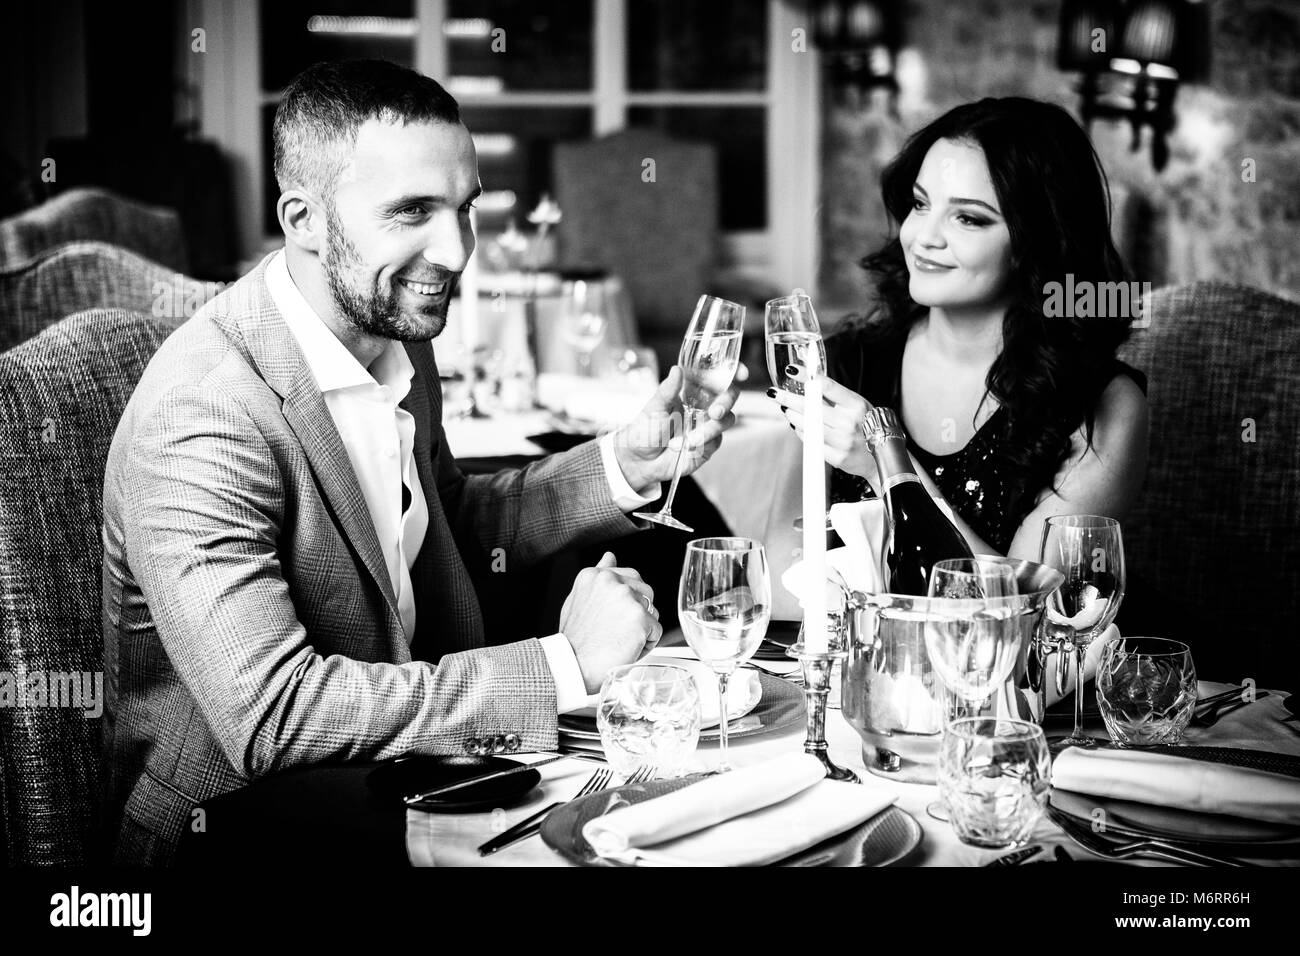 Couple celebrating in restaurant Stock Photo